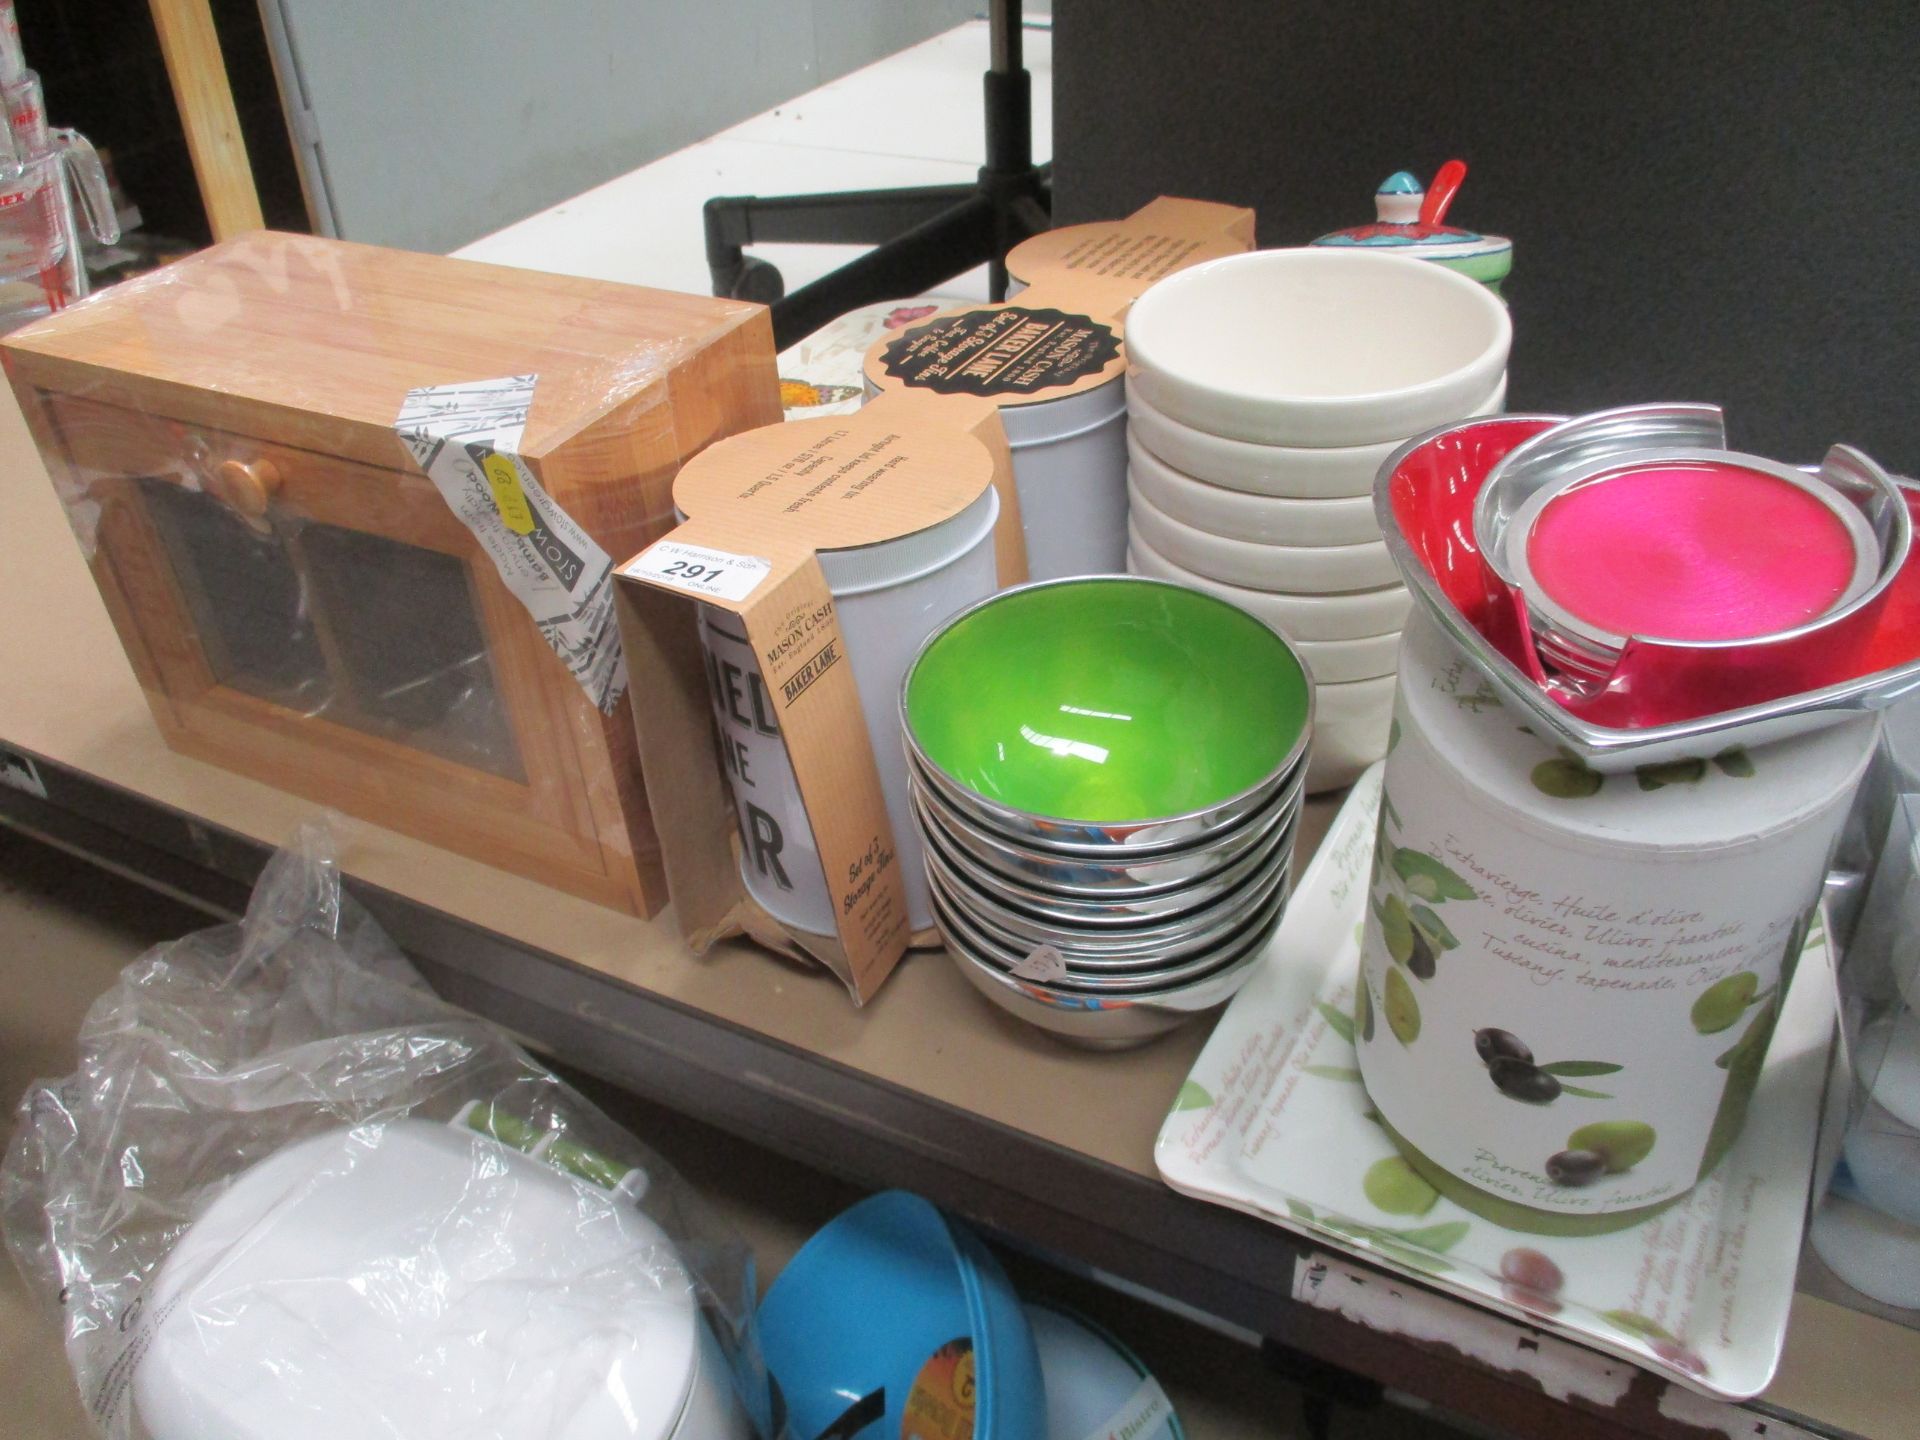 30 x items - Yinci porcelain egg cups, Mason Cash bowls, Mason Cash baking lane tins etc.